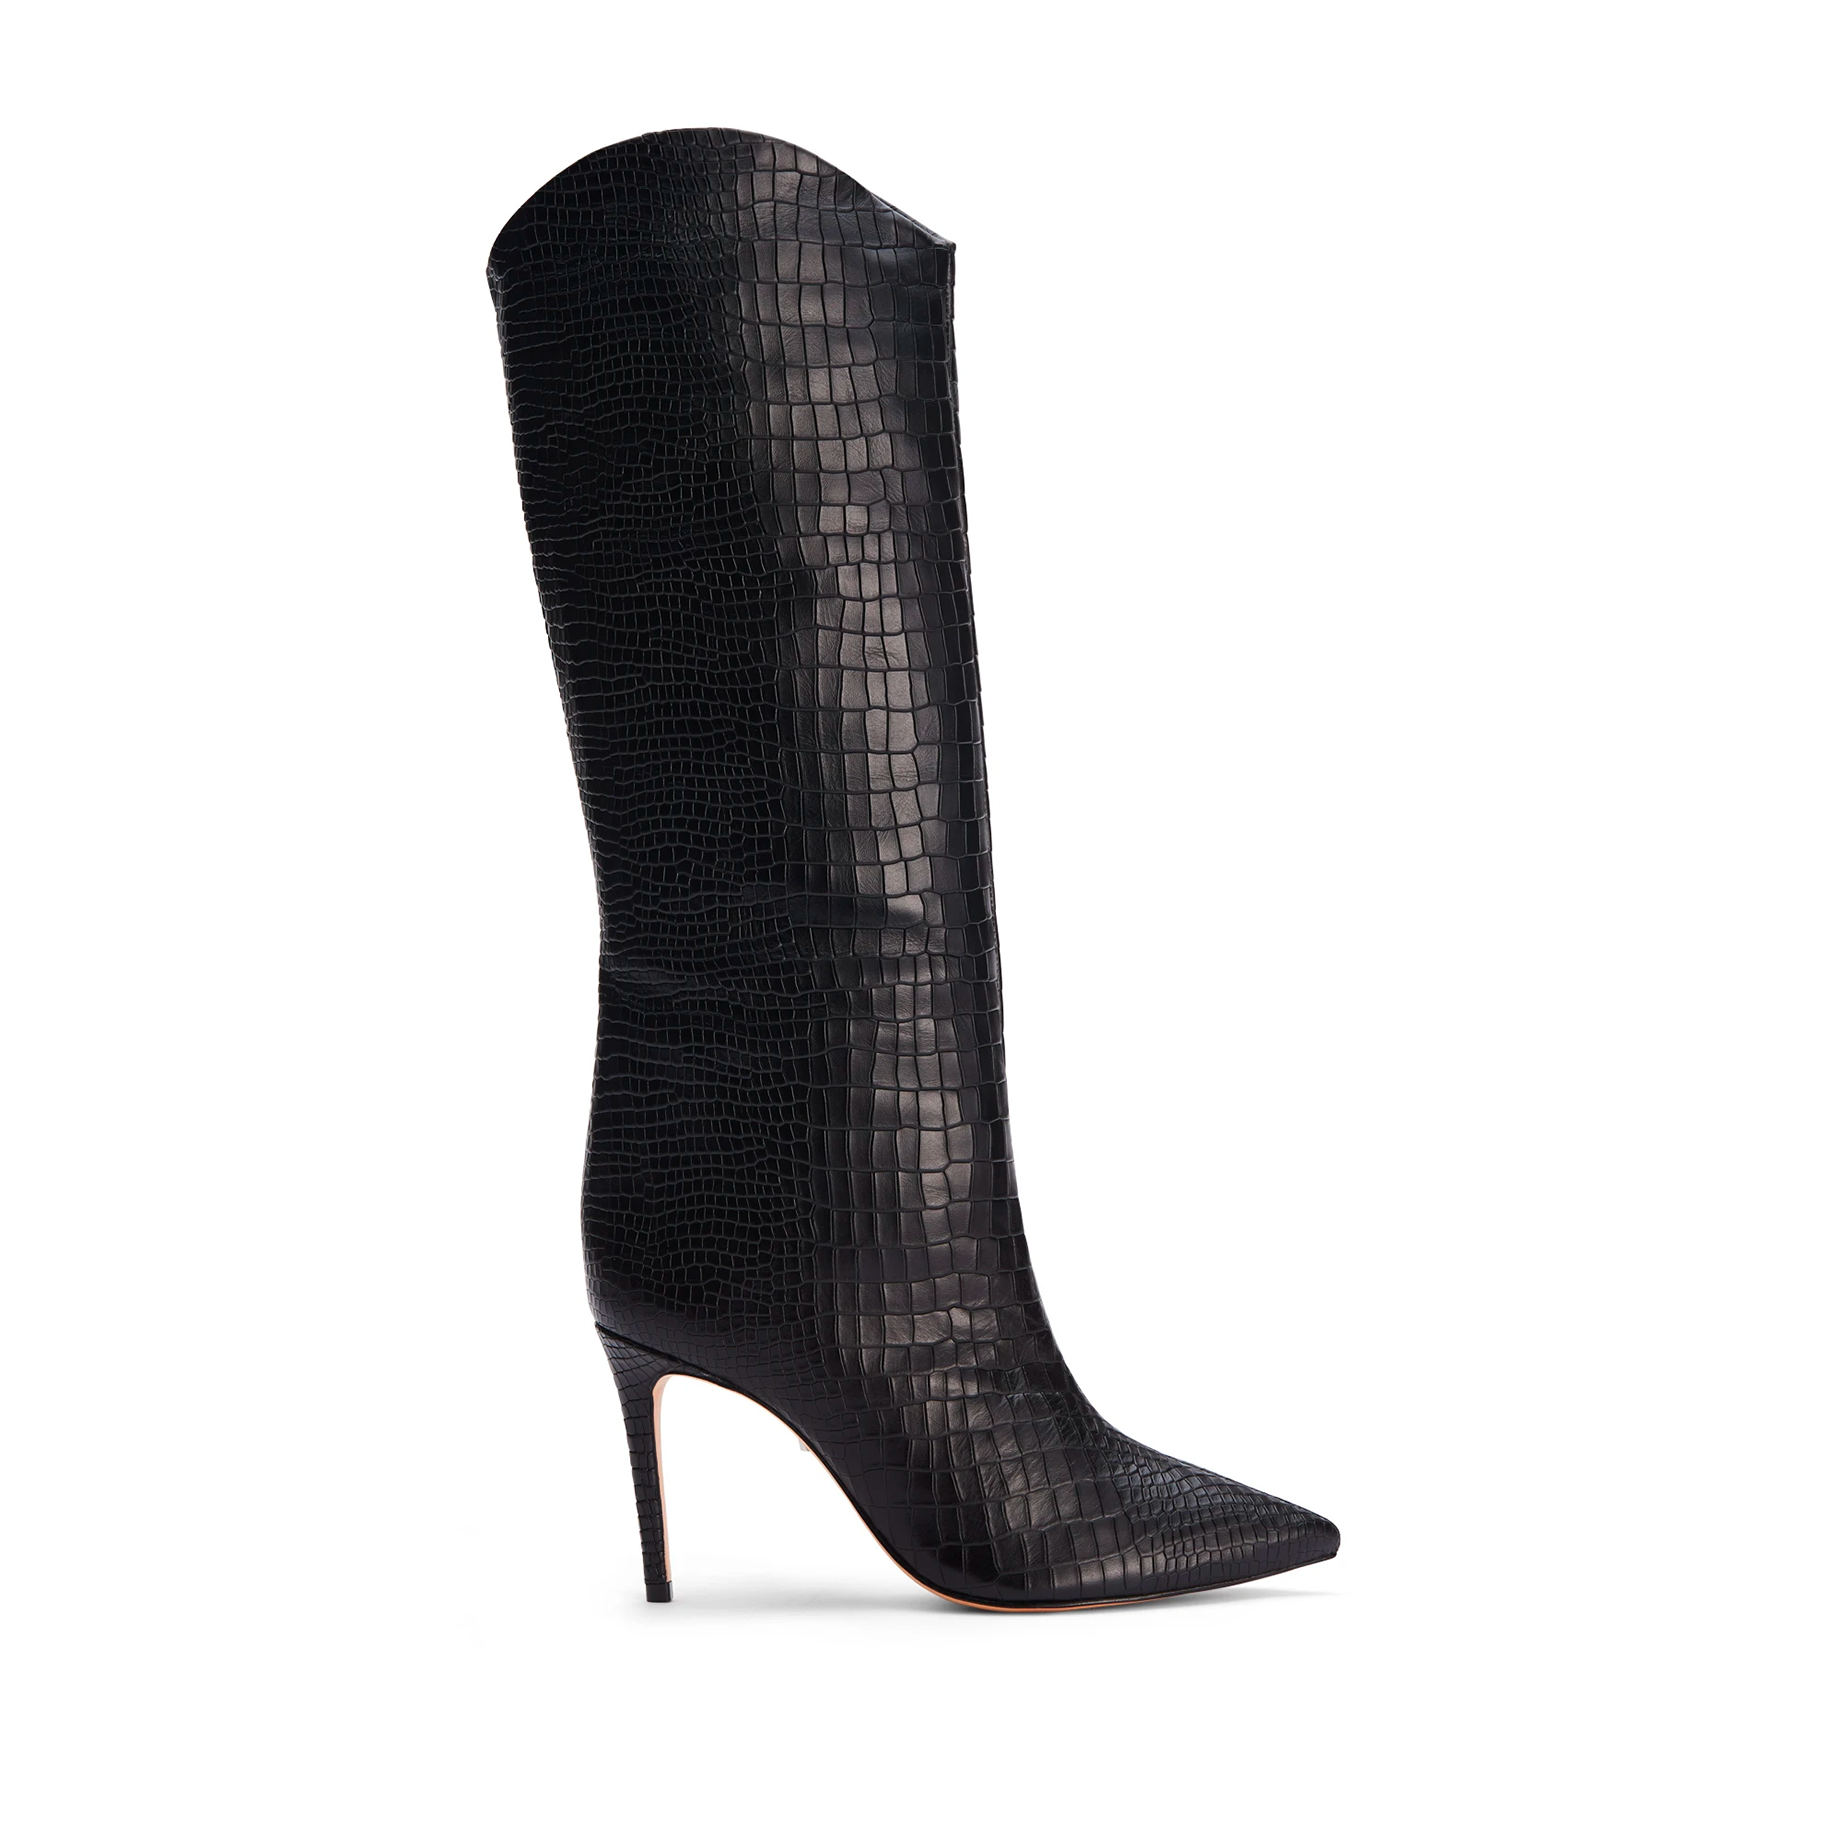 Maryana Boot in high-shine patent leather! | Schutz Shoes – SCHUTZ